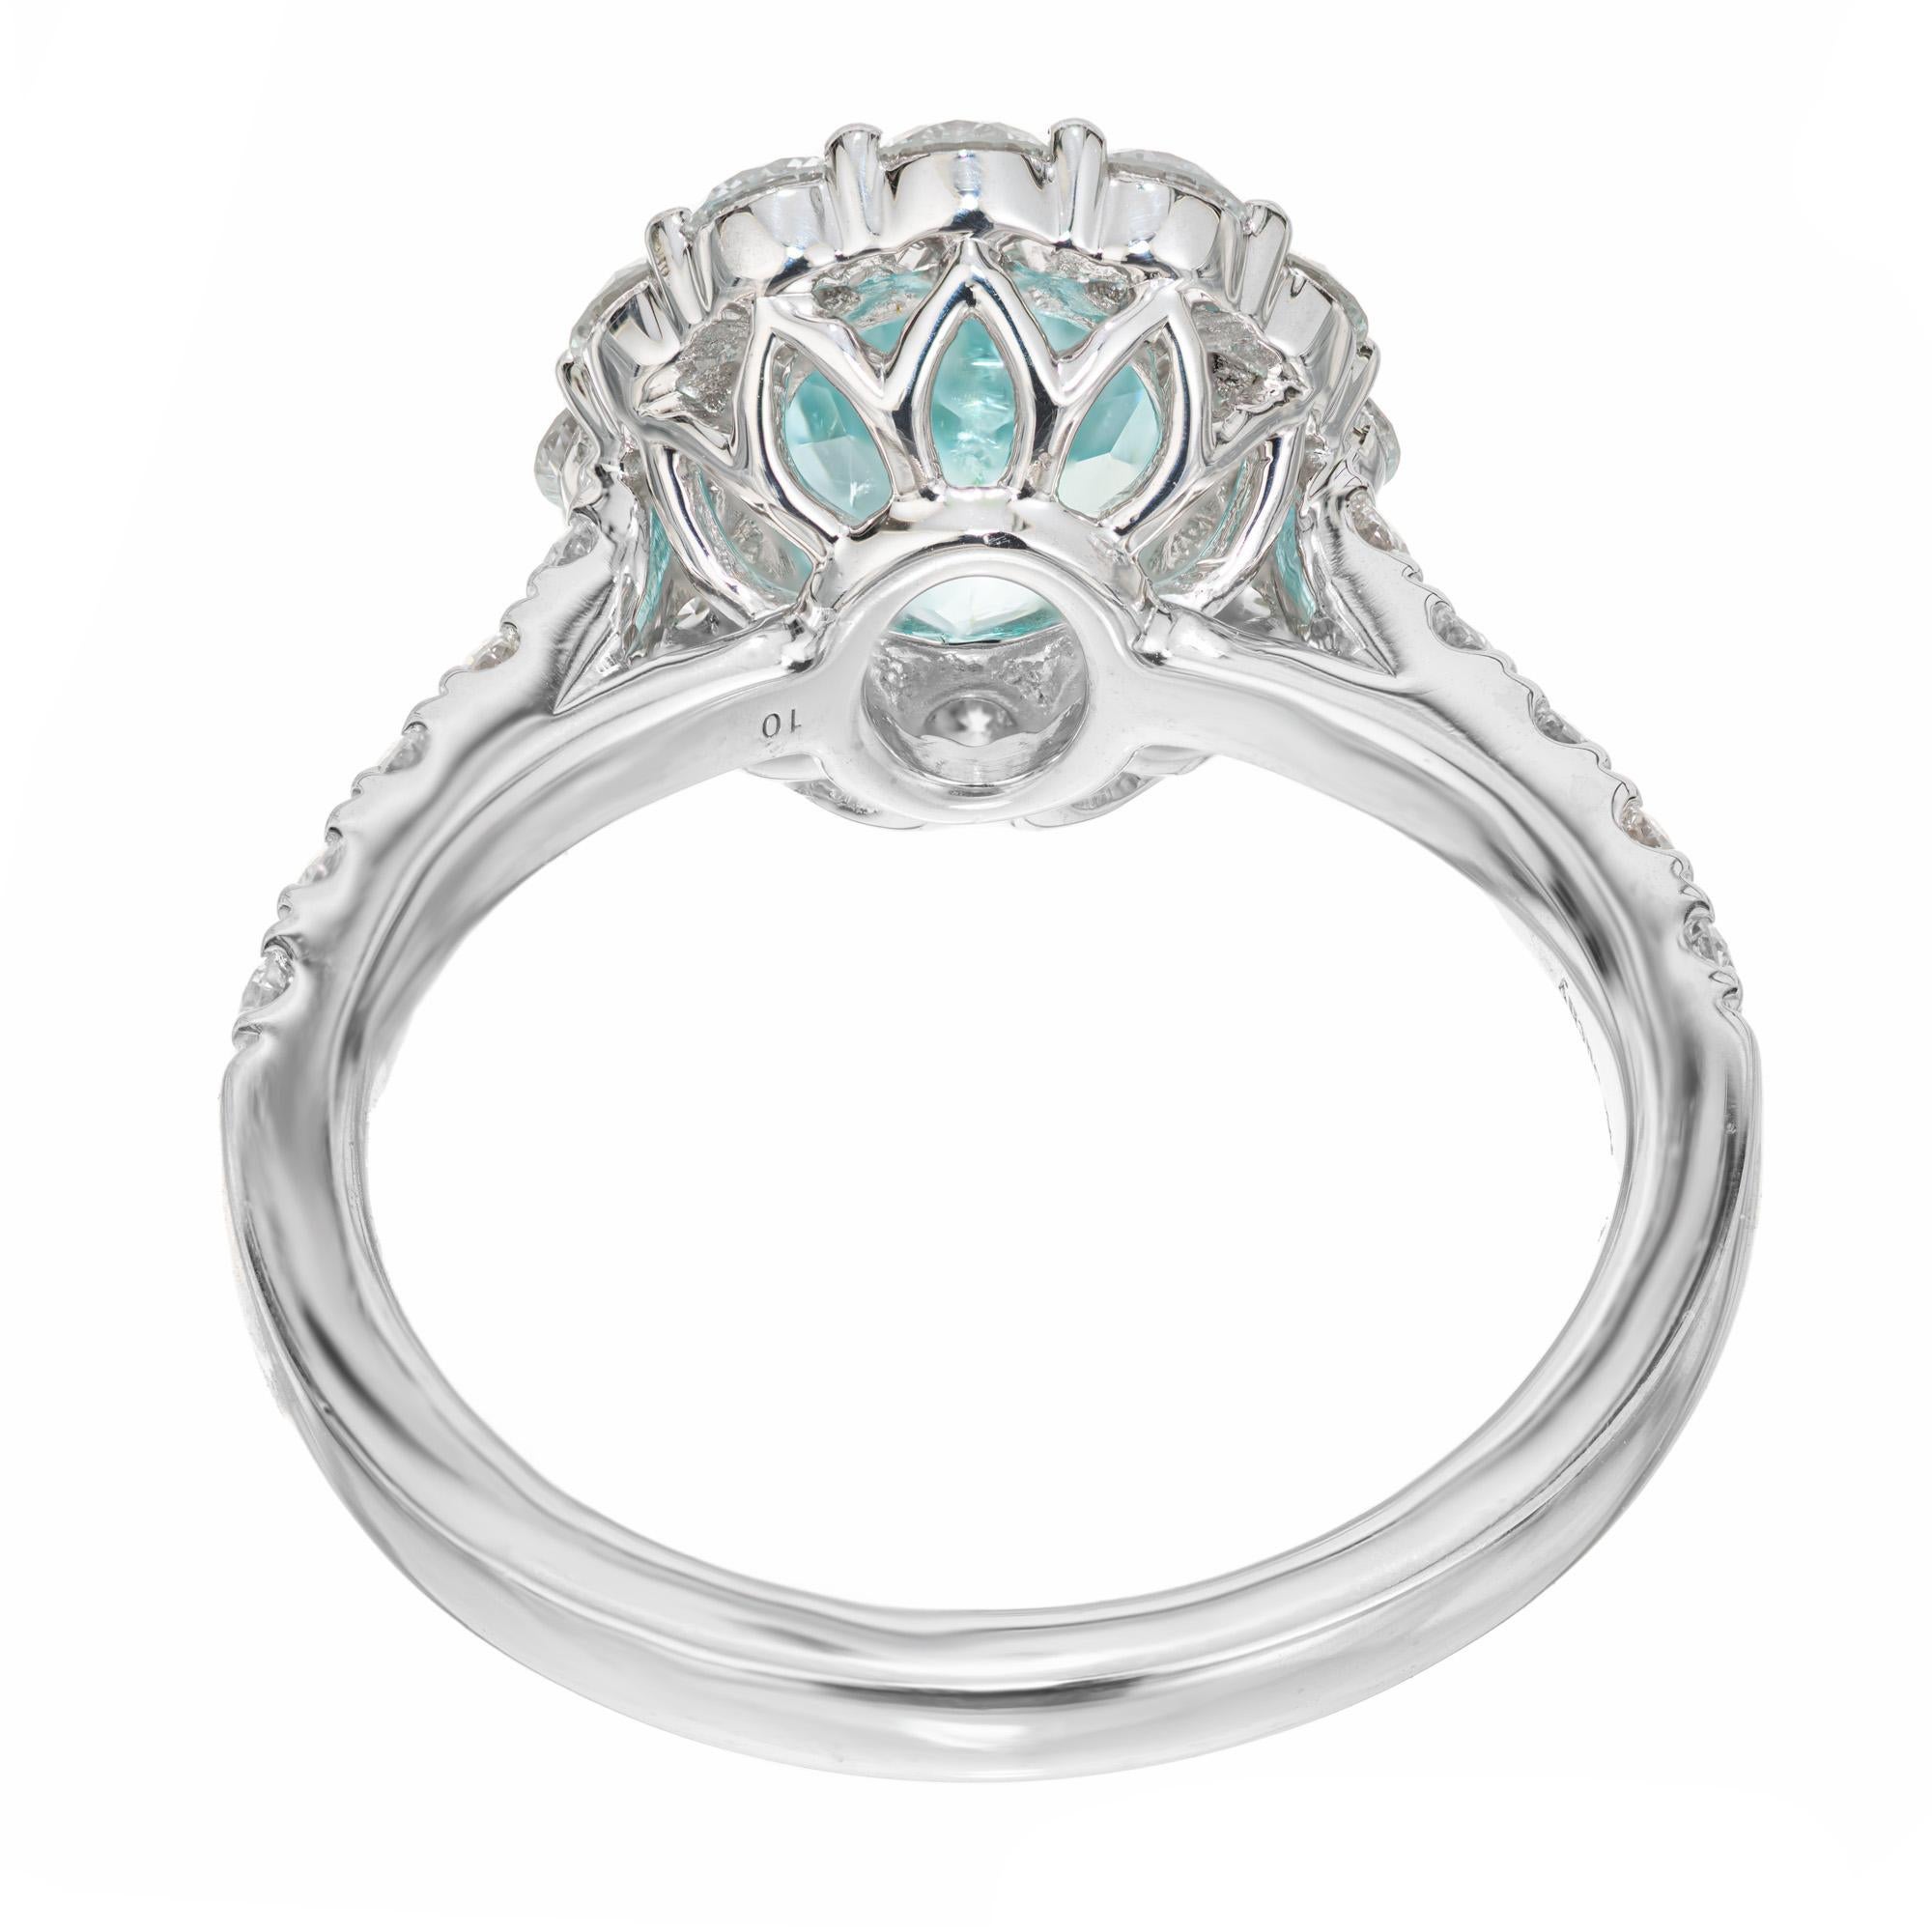 Peter Suchy GIA Certified 1.99 Carat Paraiba Tourmaline Diamond Platinum Ring For Sale 1